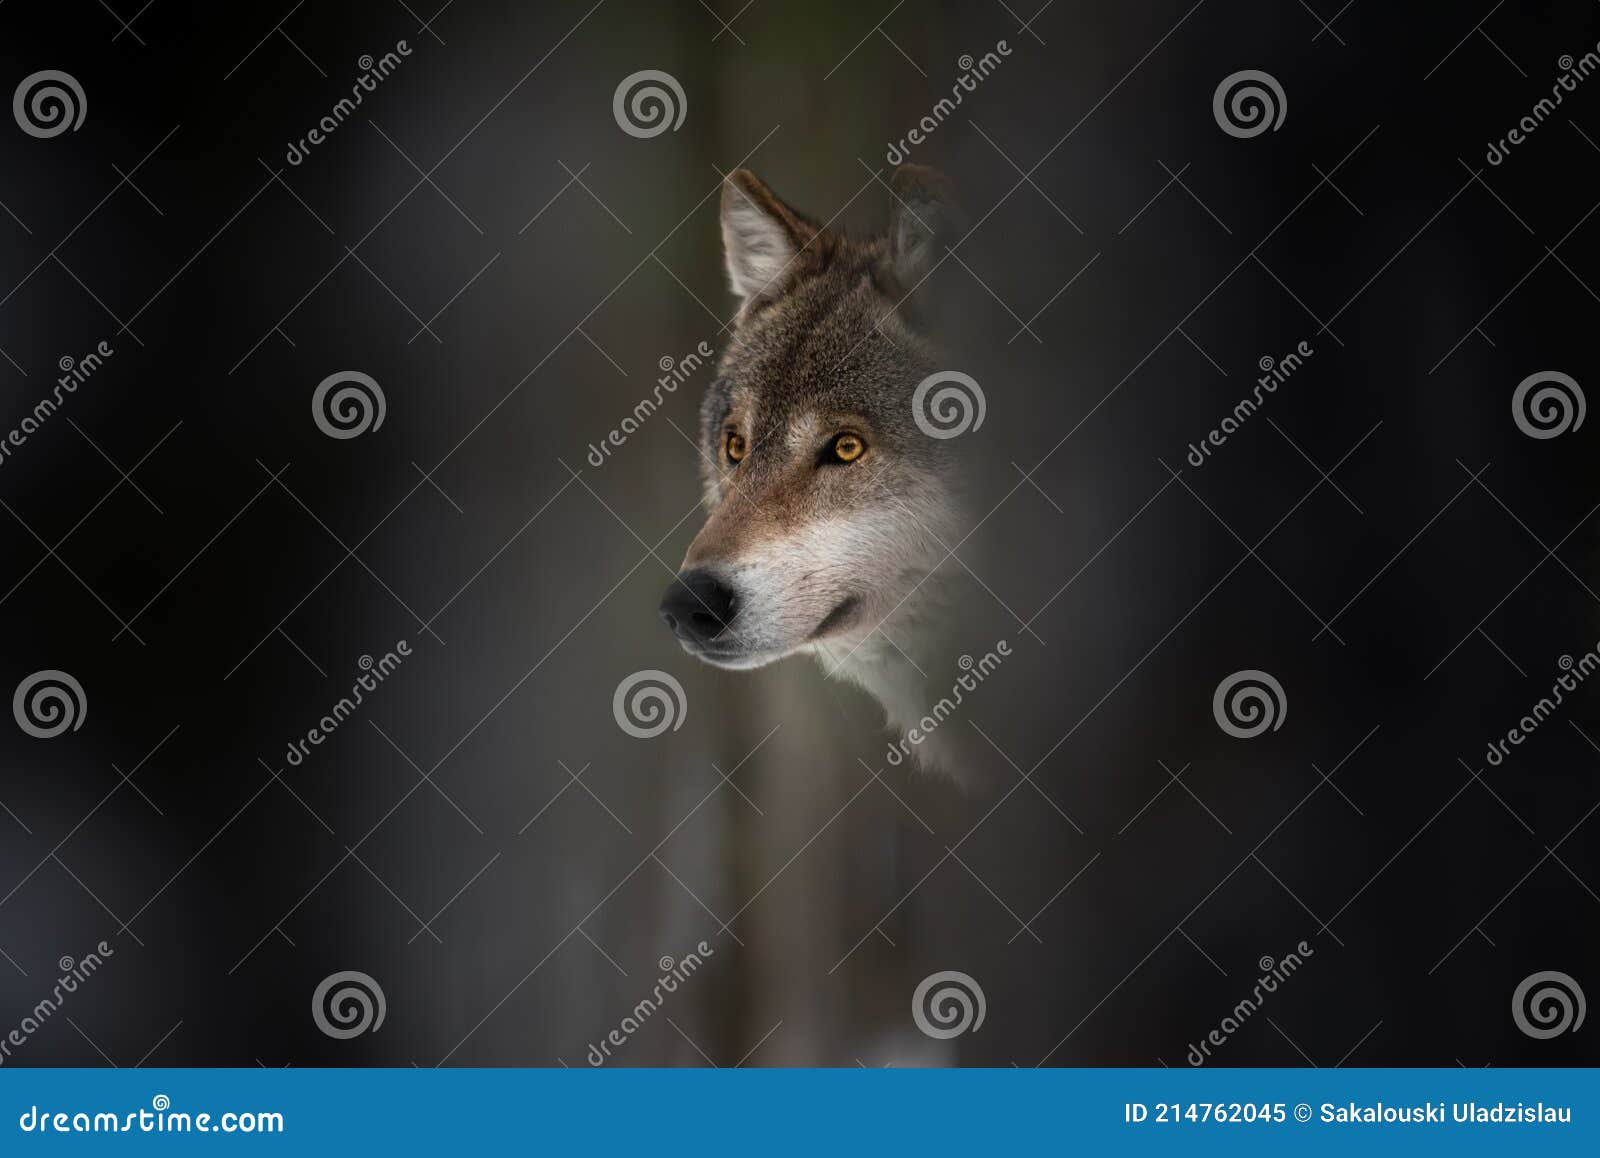 wolf muzzle. european wolf with glowing eyes among tree trunks, dark background.